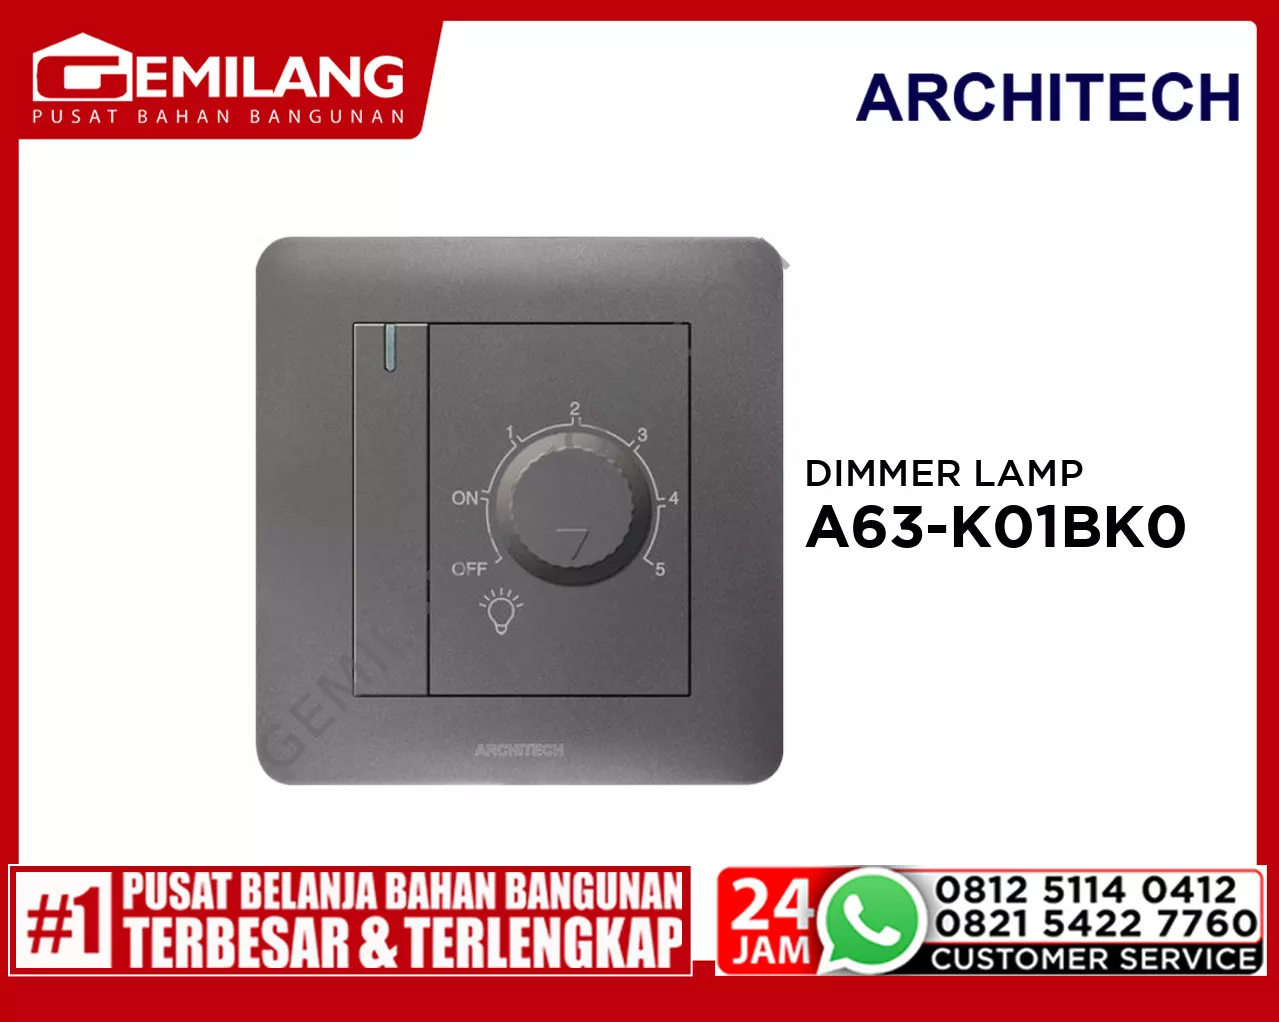 ARCHITECH SAKLAR DIMMER INFINITY GY 300w A63-K01BK09